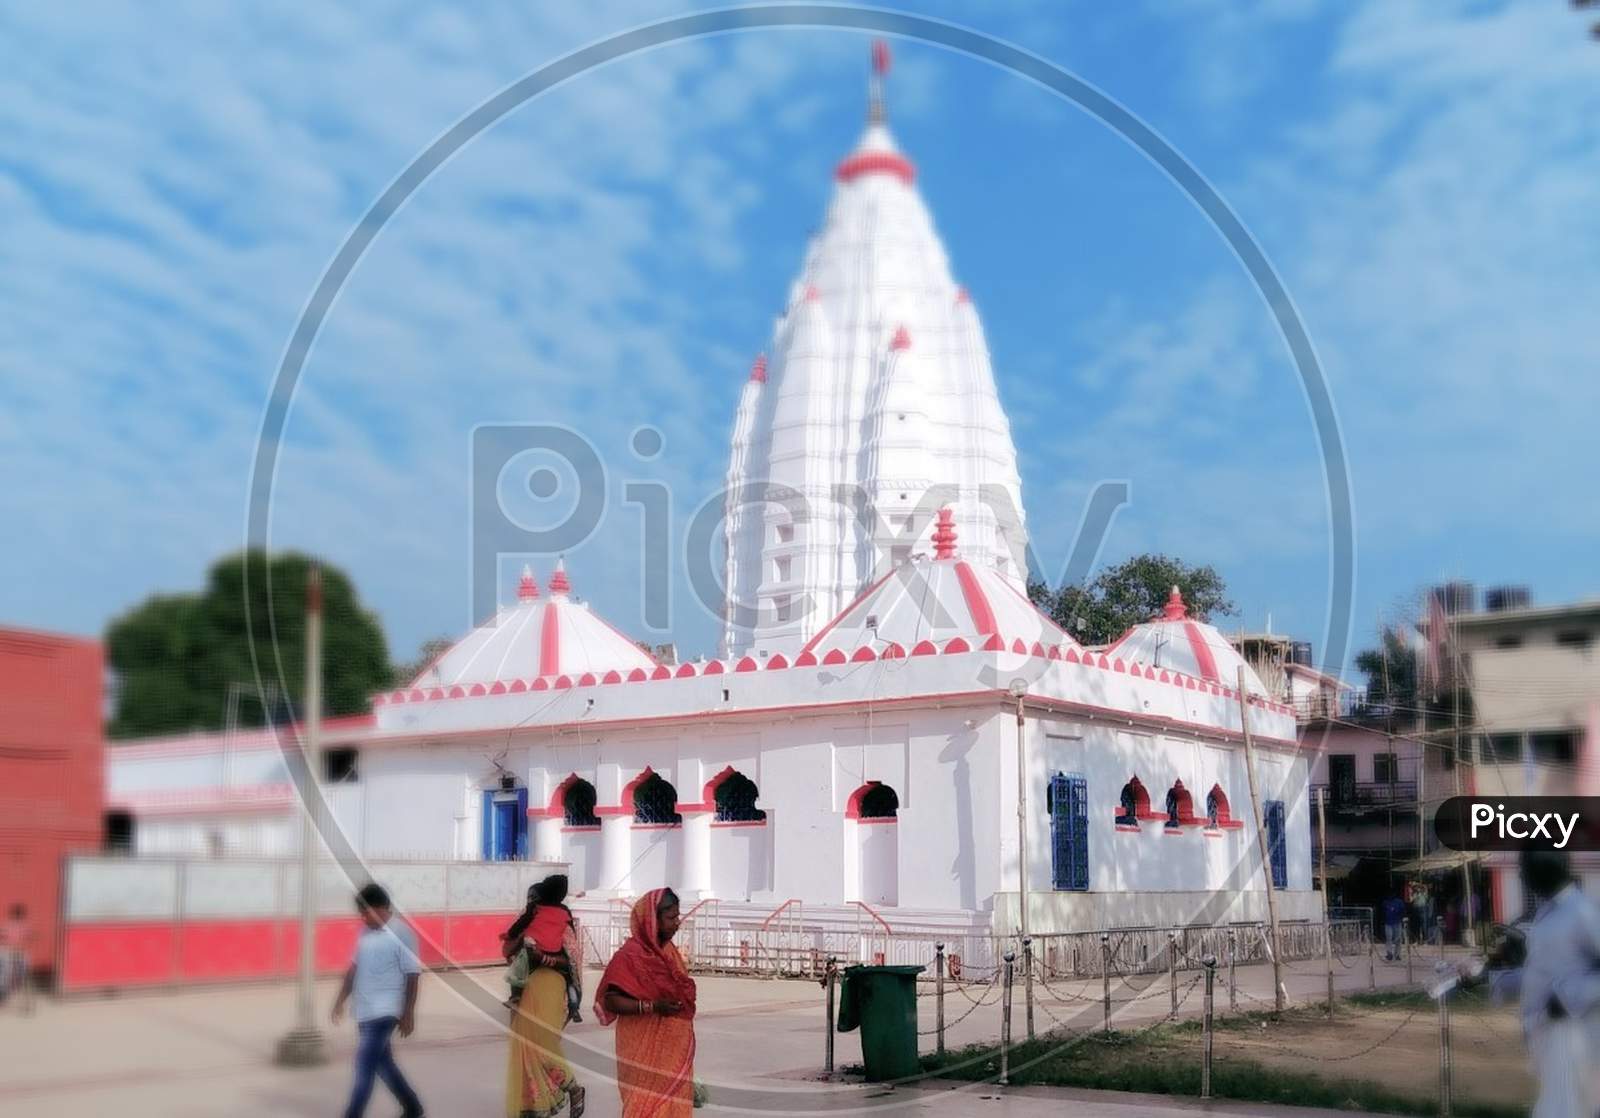 Samleswari Temple